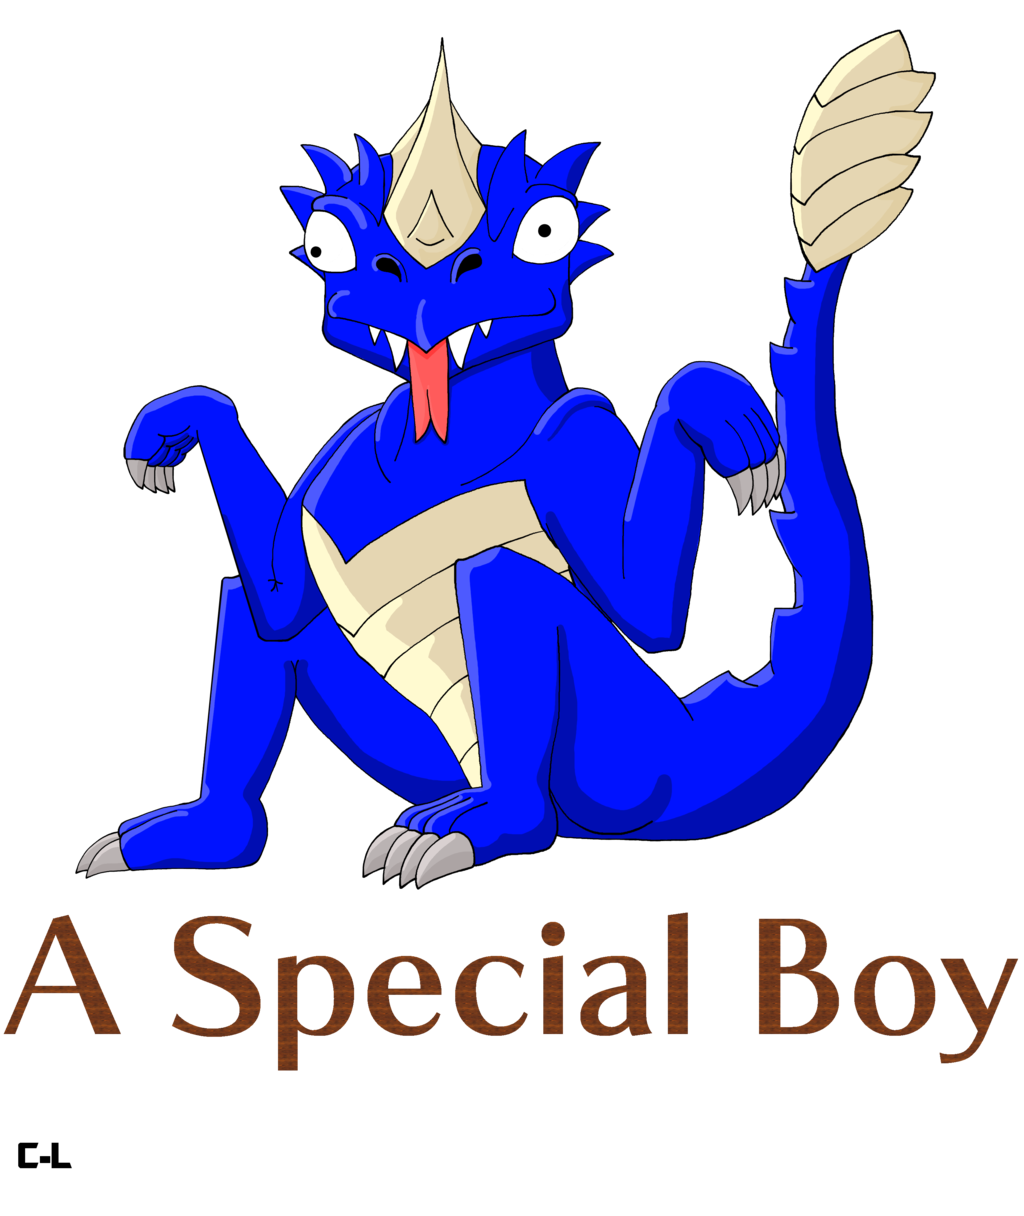 A special boy